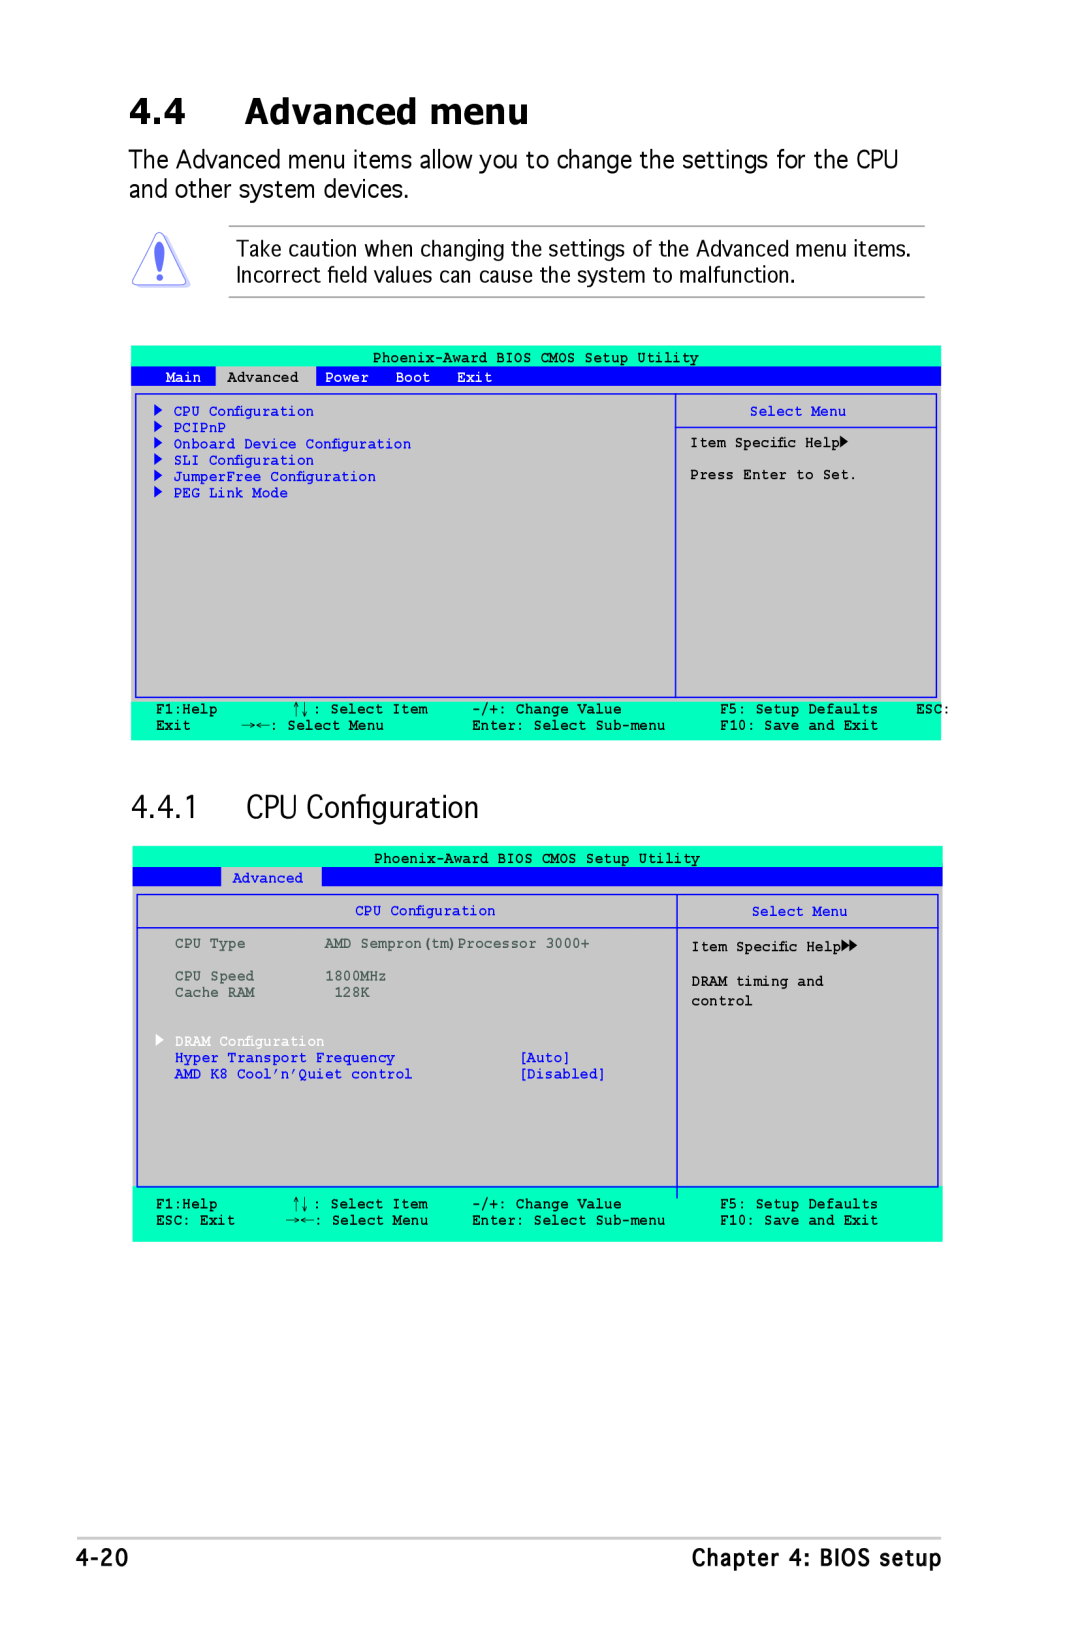 Asus A8N-SLI SE manual Advanced menu, CPU Conﬁguration 